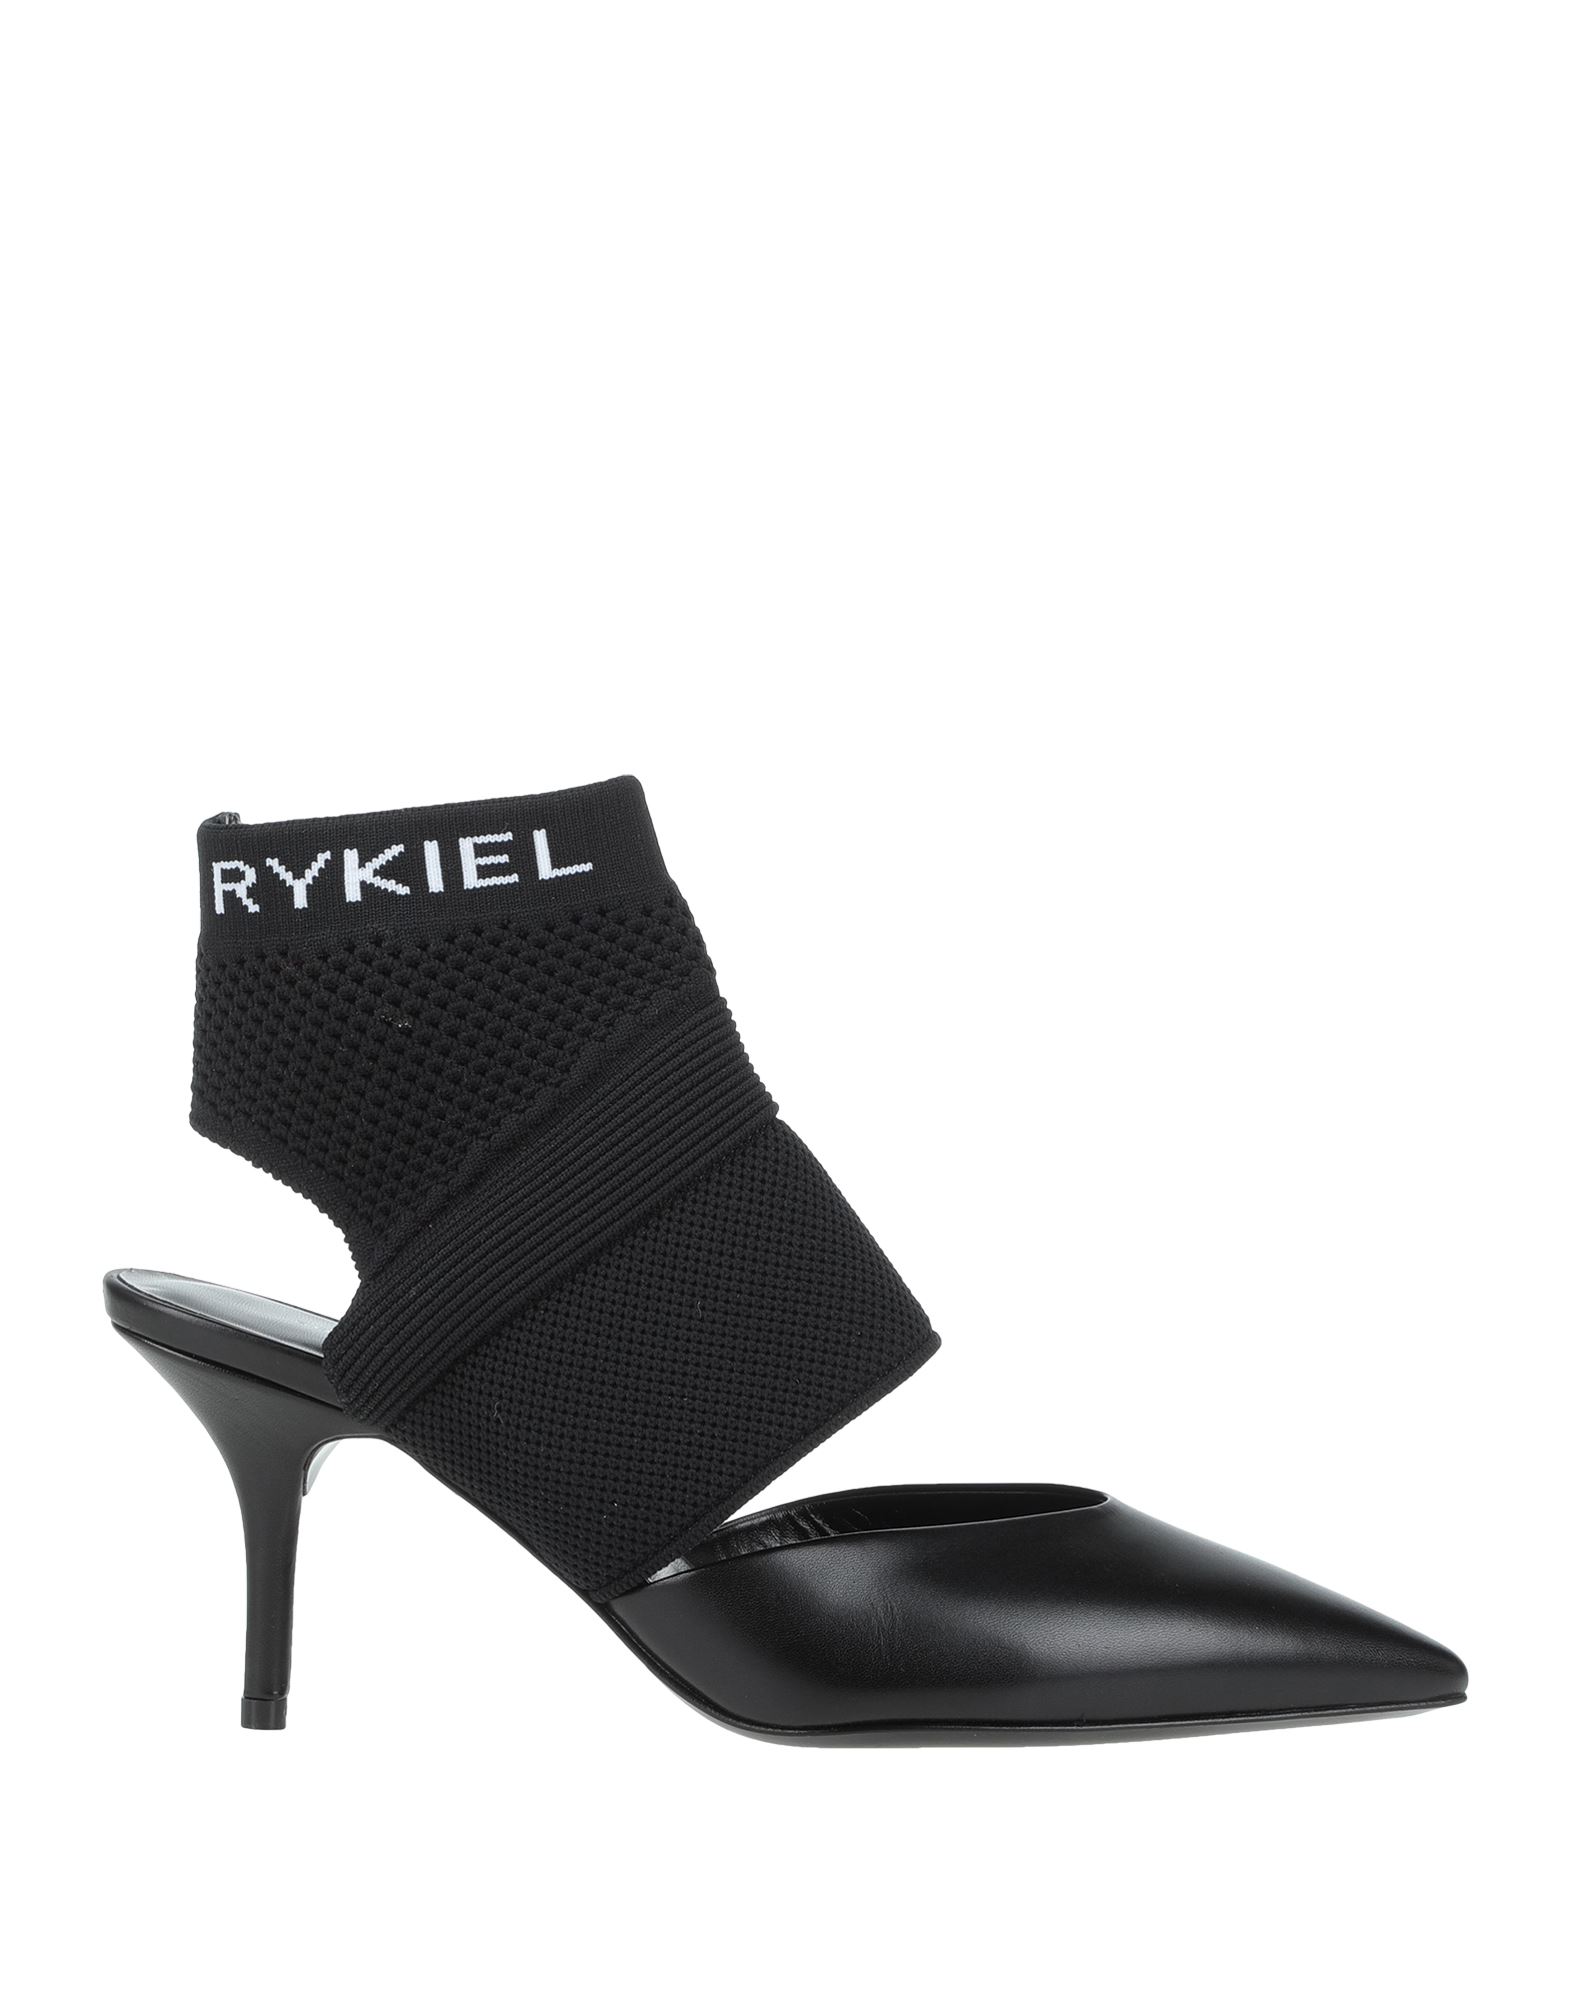 Sonia Rykiel Ankle Boots In Black